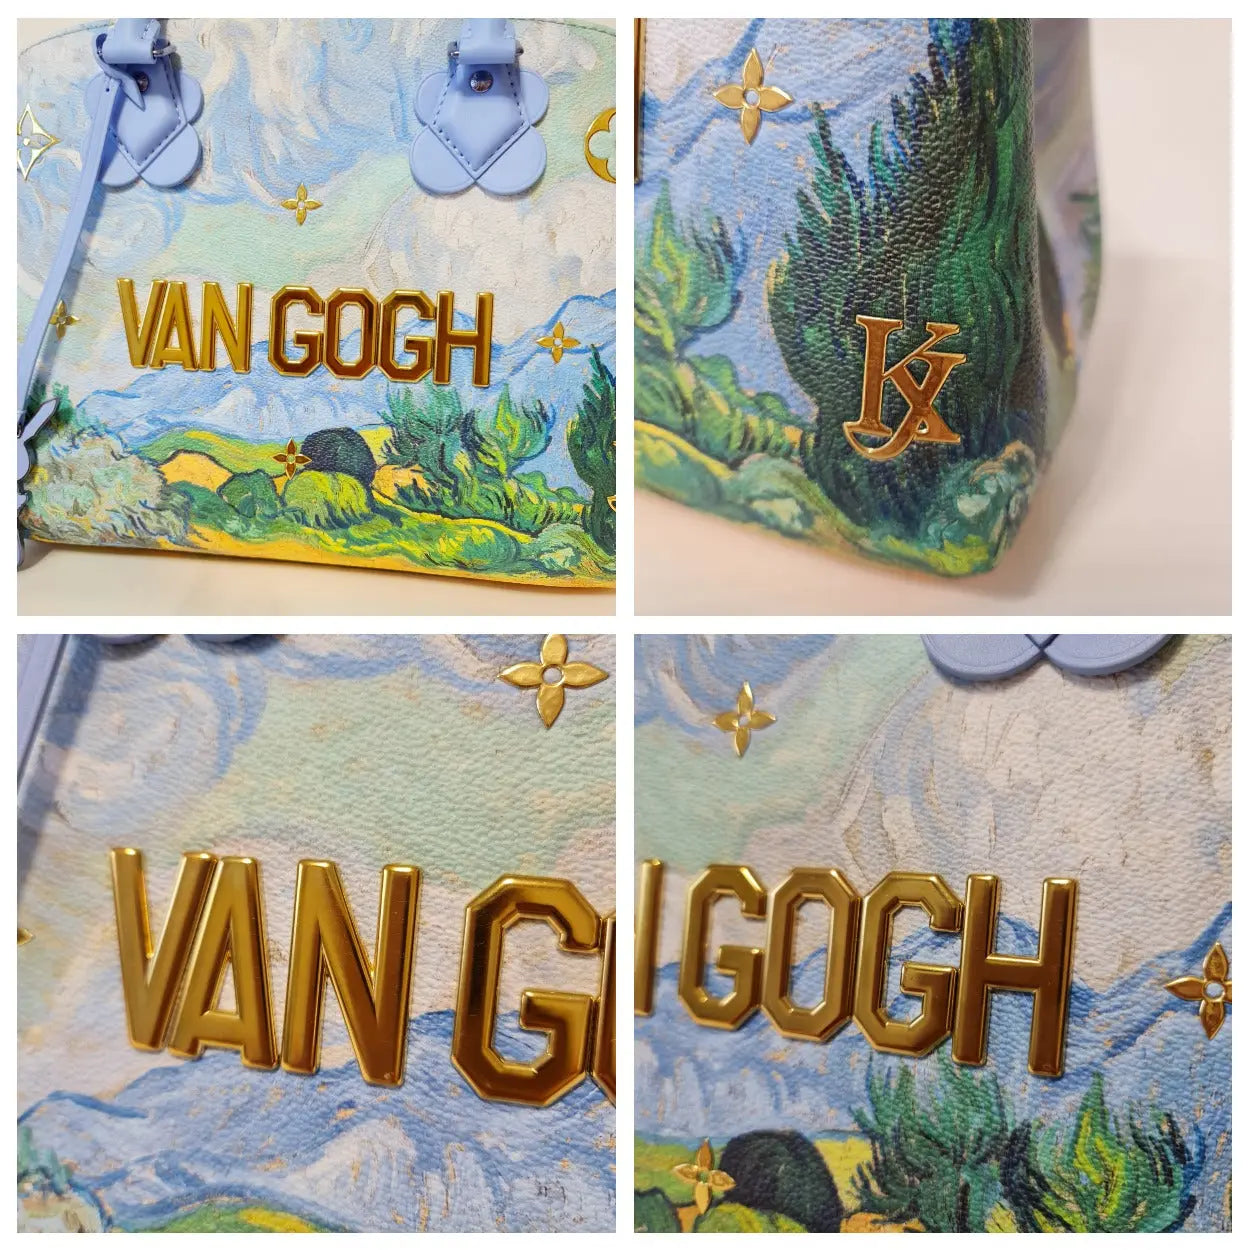 LOUIS VUITTON Montaigne MM Van Gogh Masters LV X Koon Shoulder Bag JV1012